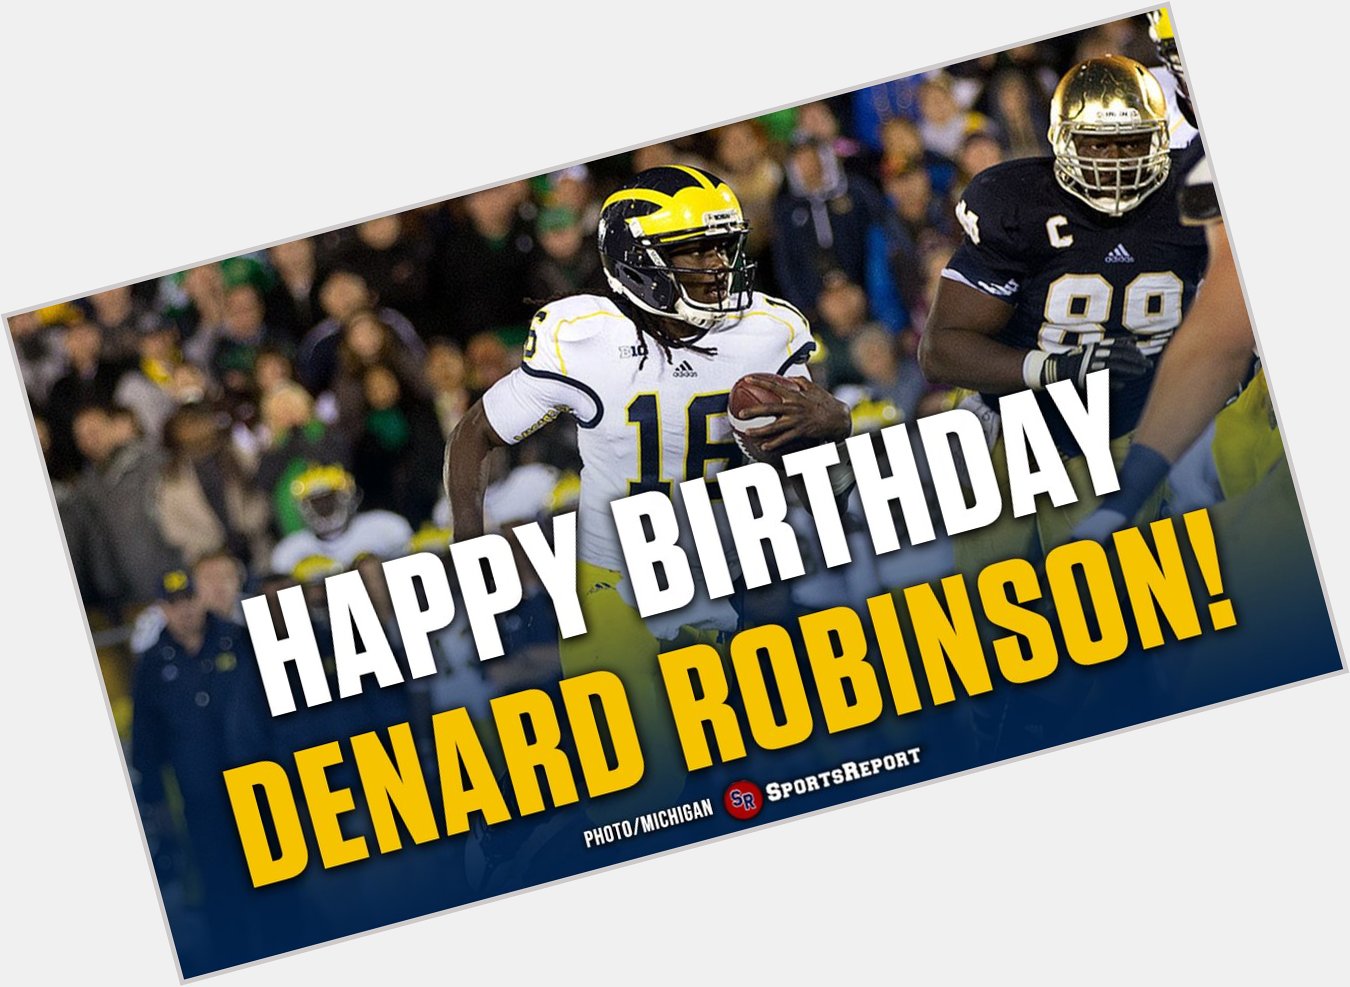  Fans, let\s wish legend Denard Robinson a Happy Birthday! 